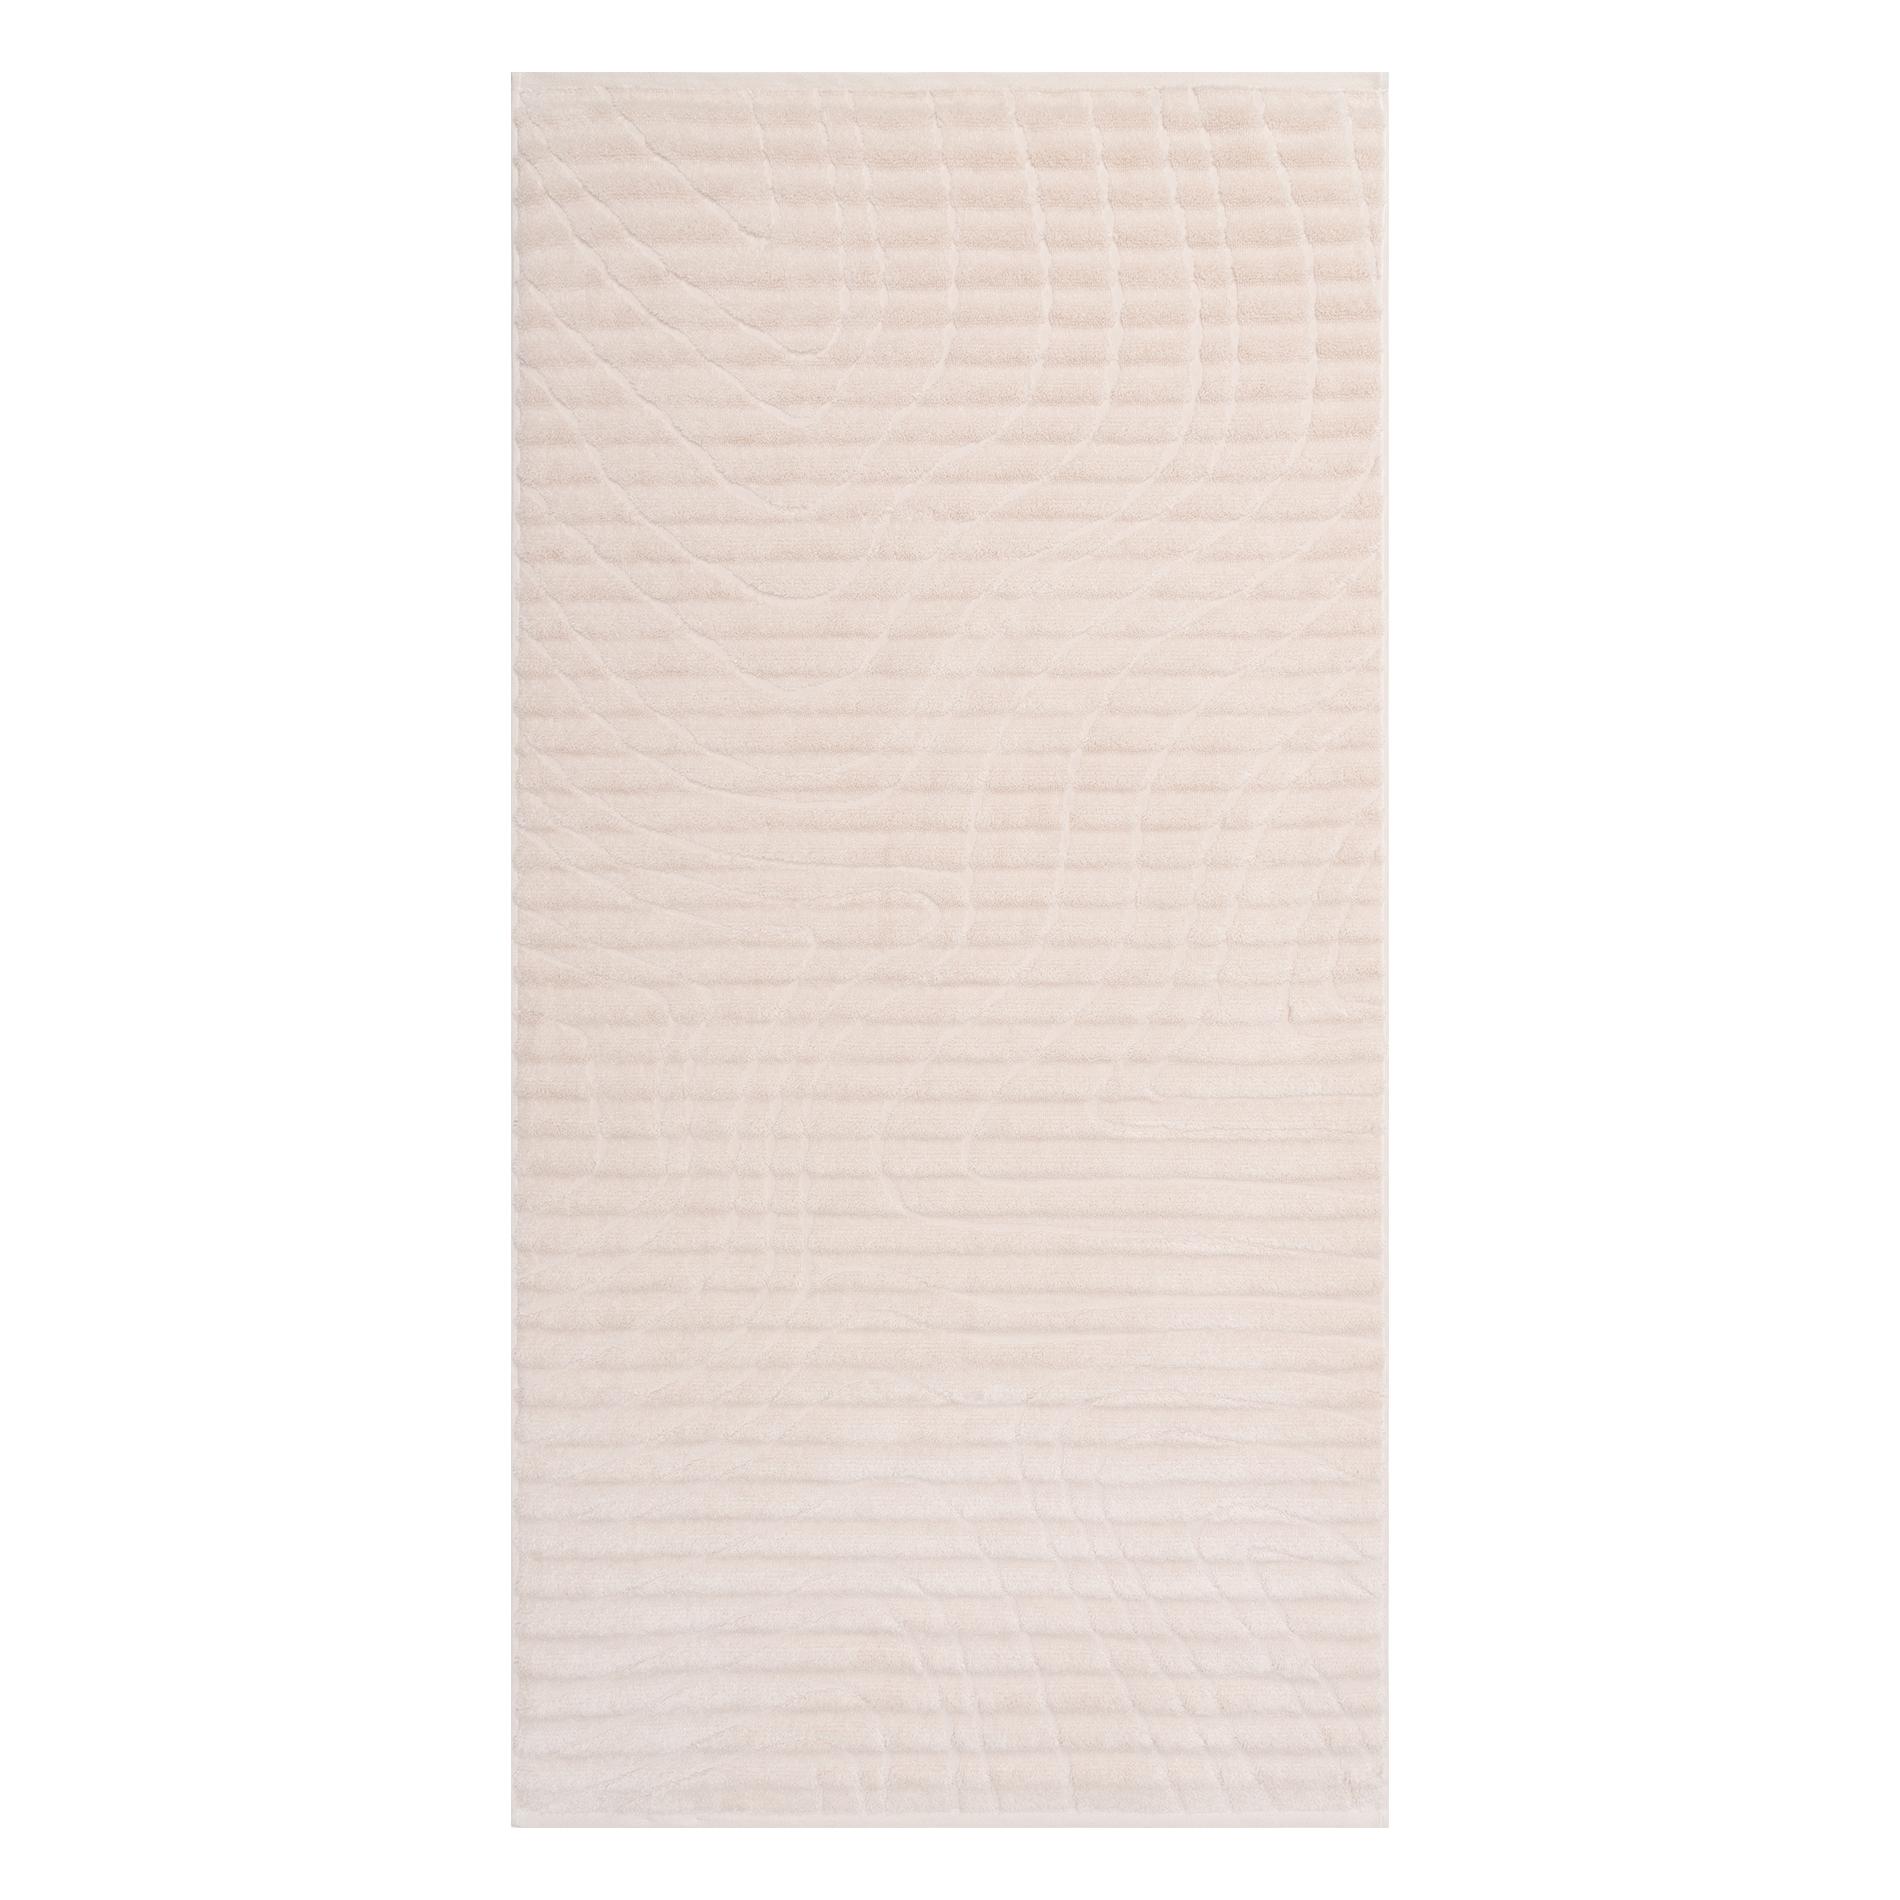 Махровое полотенце Cleanelly Albero bianco молочное 70х140 см полотенце махровое банное черное плотность 450 г 70х140 5 штук